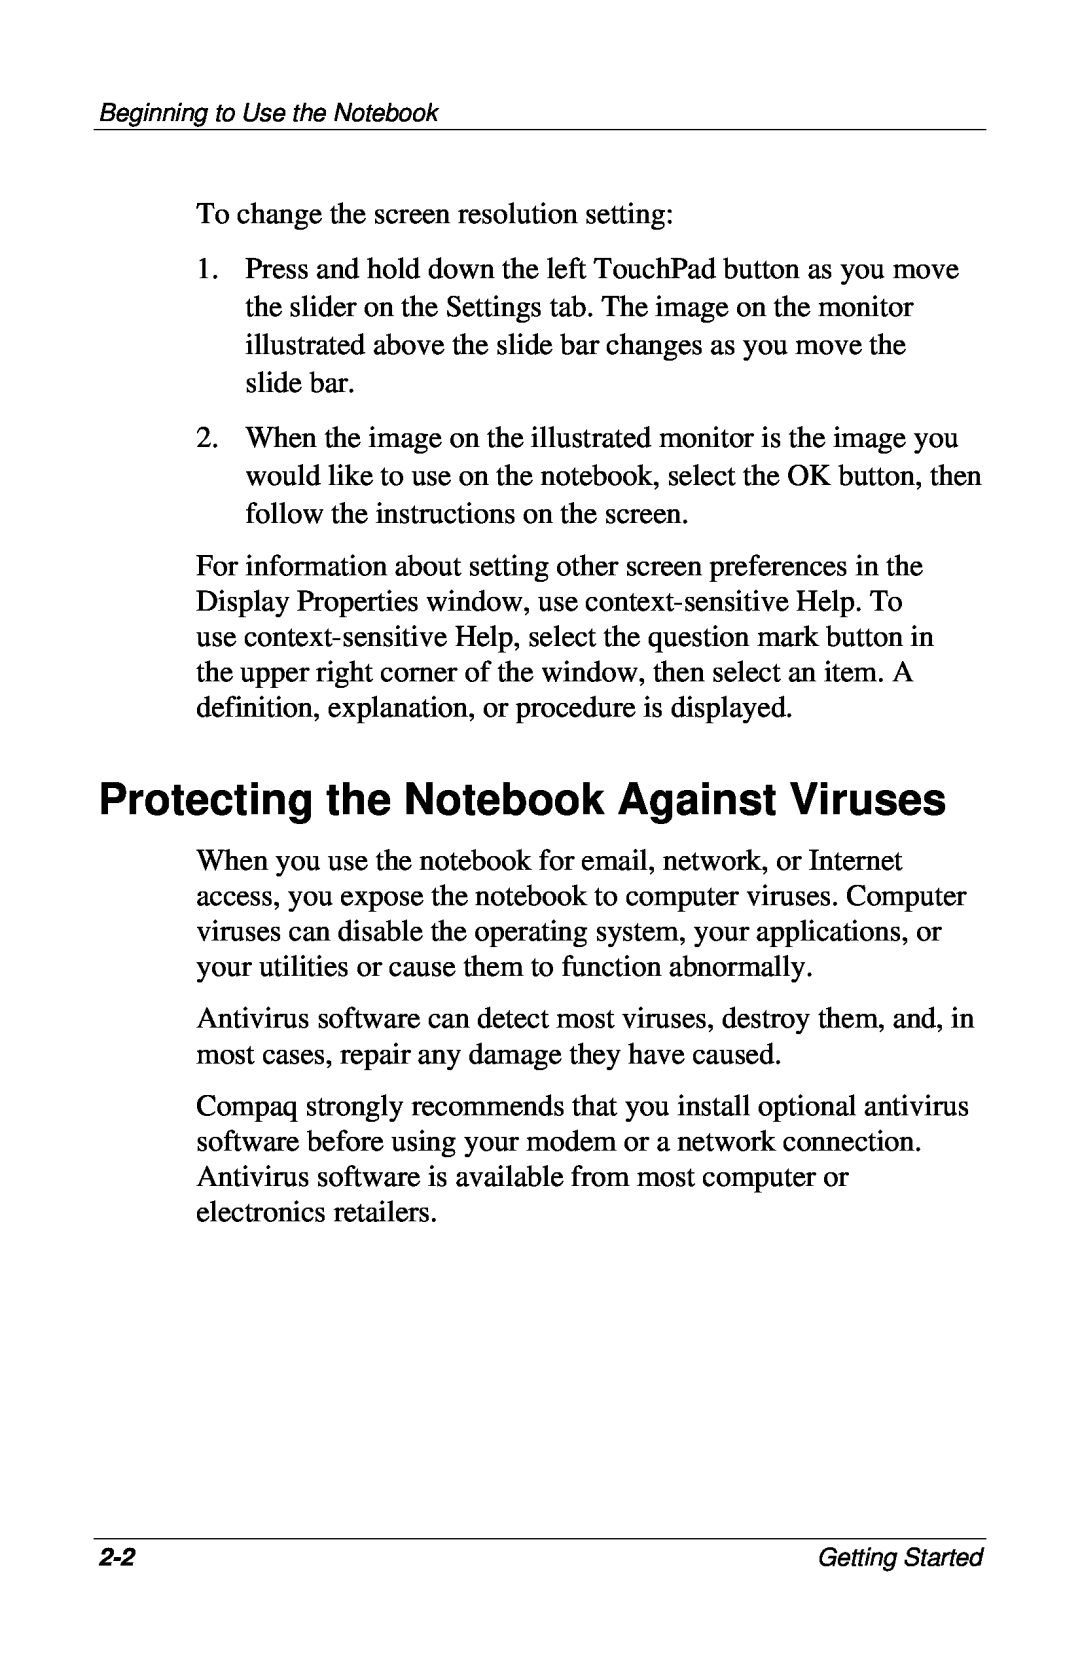 HP 904EA, 955AP, 950AP, 943AP, 945AP, 940AP, 935AP, 927AP, 930AP, 925EA, 923AP, 908EA, 906EA Protecting the Notebook Against Viruses 